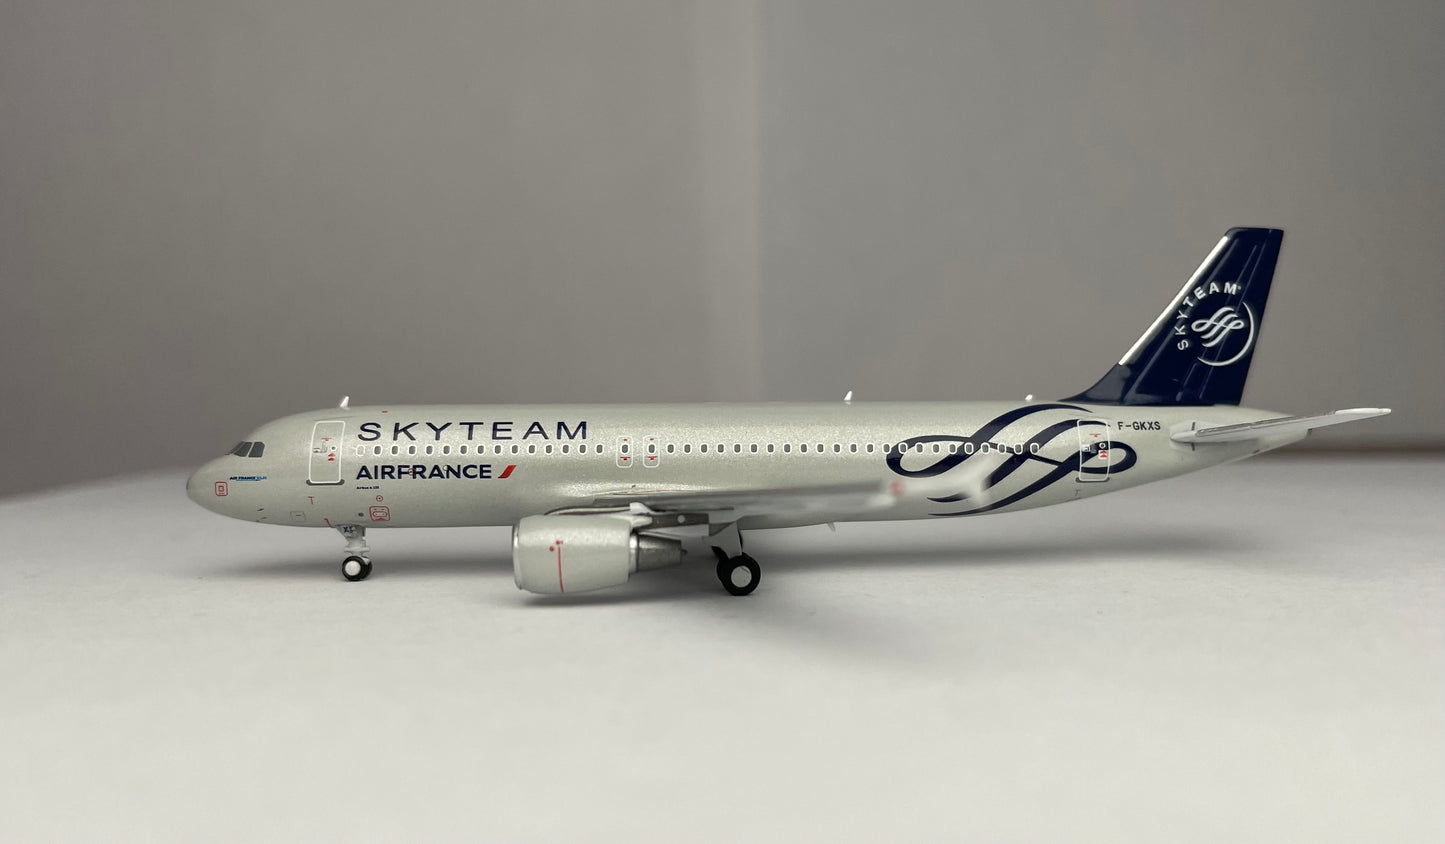 1:400 Panda Models Air France A320 "SKYTEAM" F-GKXS 202020